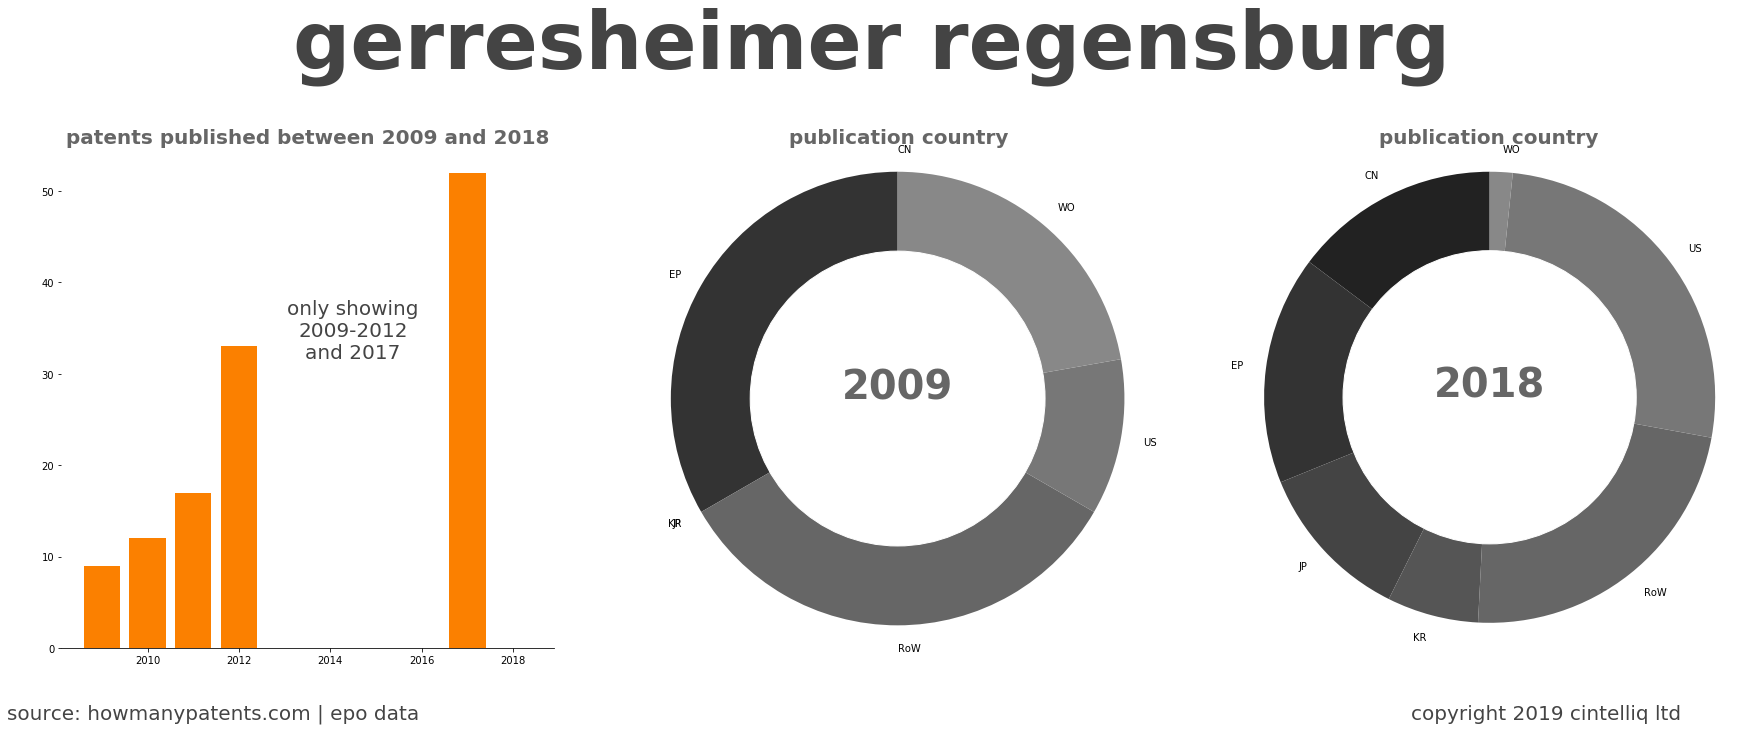 summary of patents for Gerresheimer Regensburg